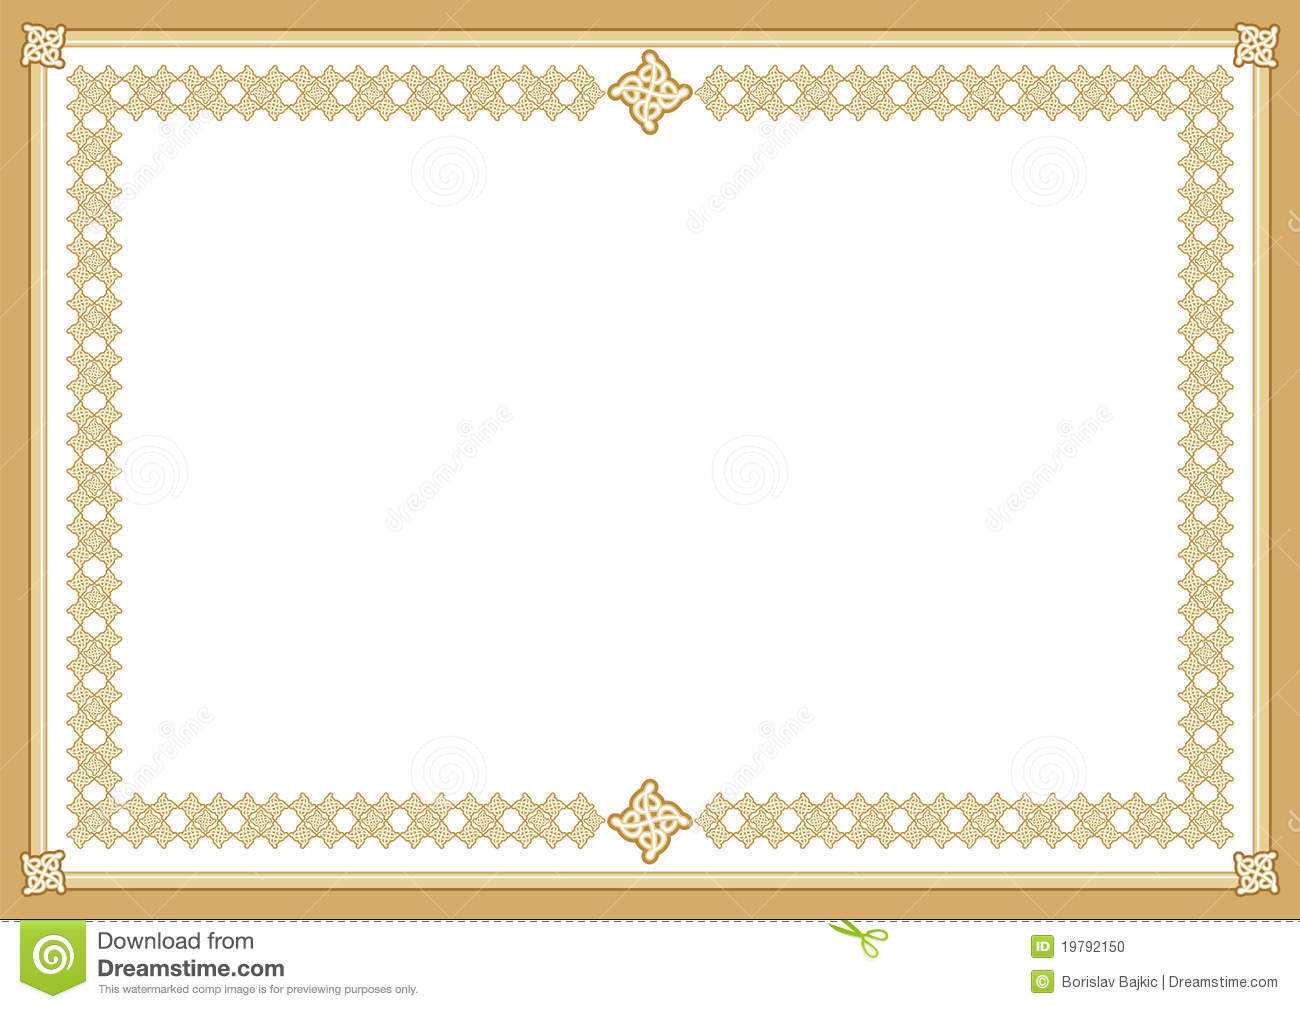 Certificate Stock Vector. Illustration Of Award, Blank Intended For Award Certificate Border Template